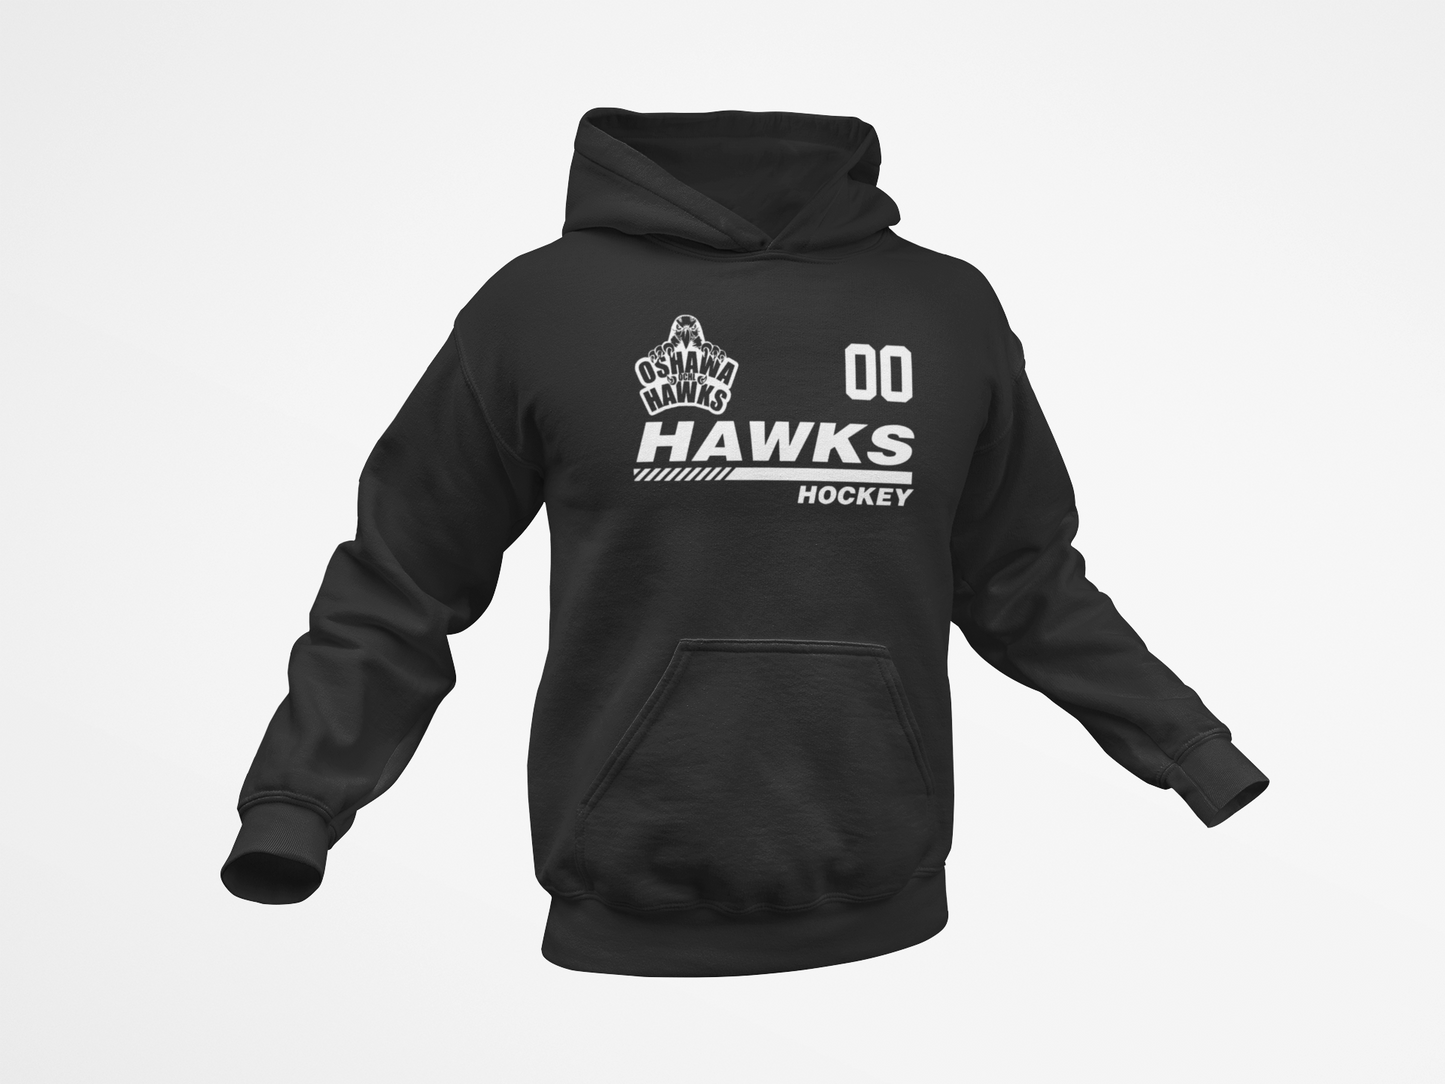 OCHL Hawks Hockey Hoodie